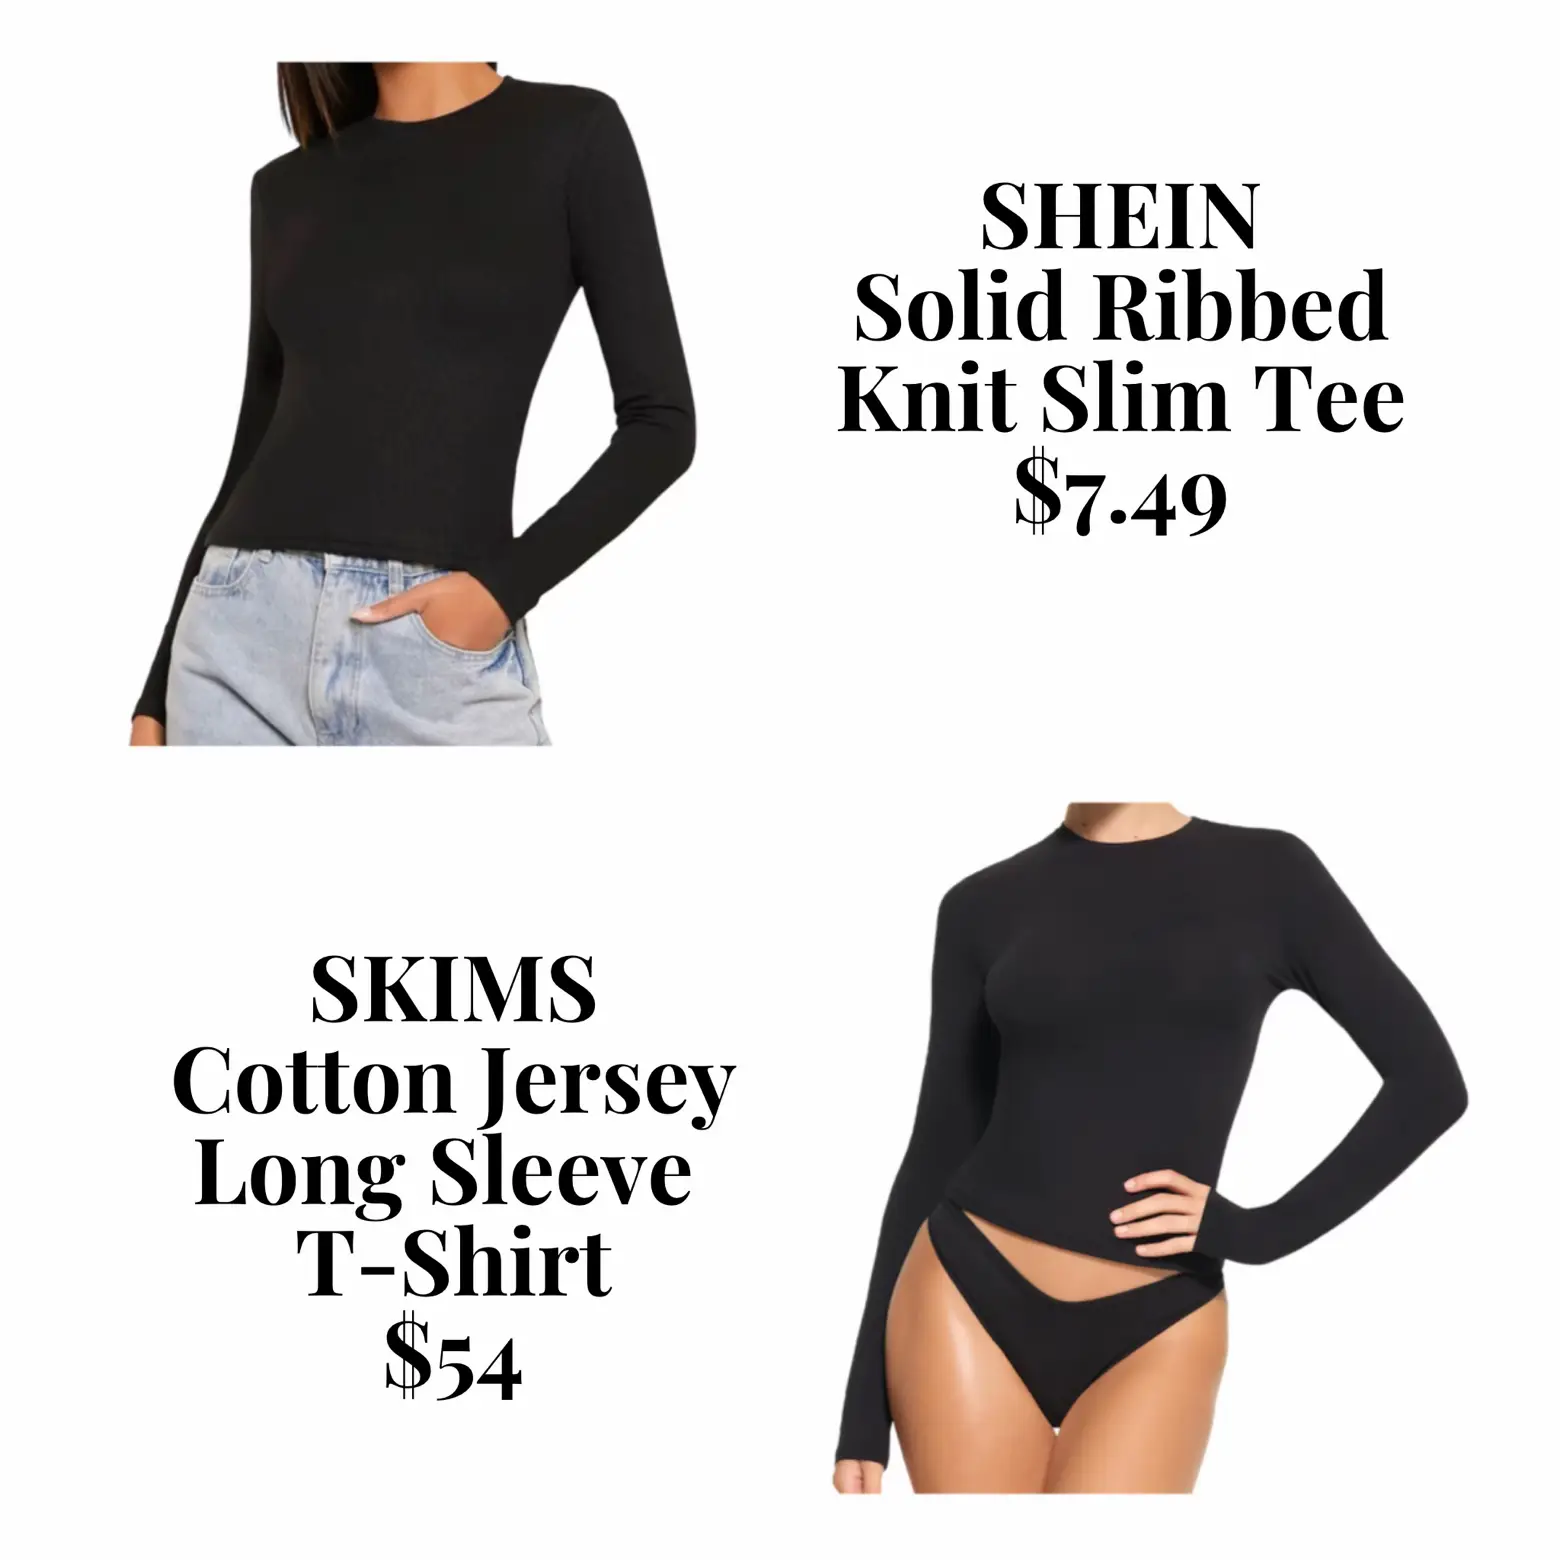 SKIMS bodysuit dupe for half the price 💸🖤